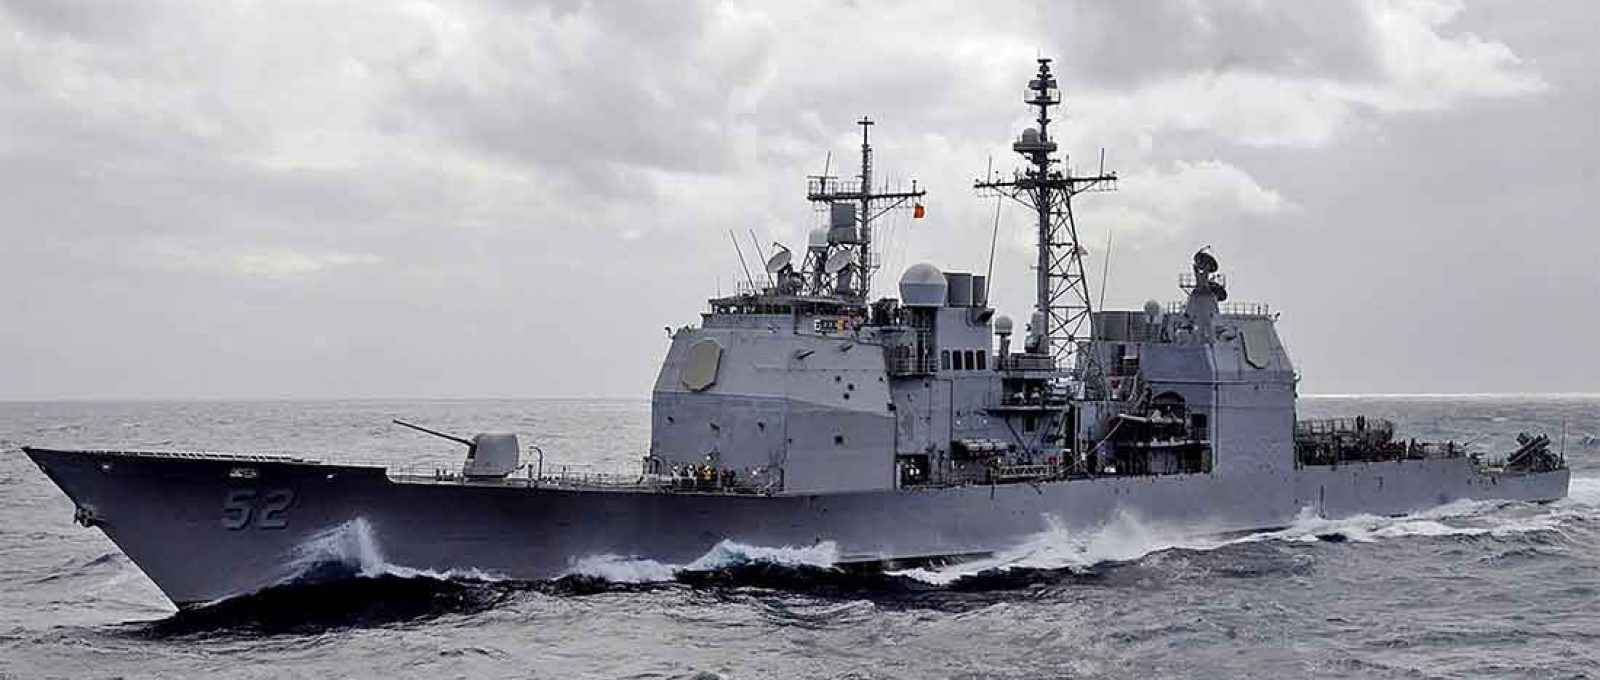 O cruzador da US Navy classe Ticonderoga, USS Bunker Hill (Foto: US Navy).